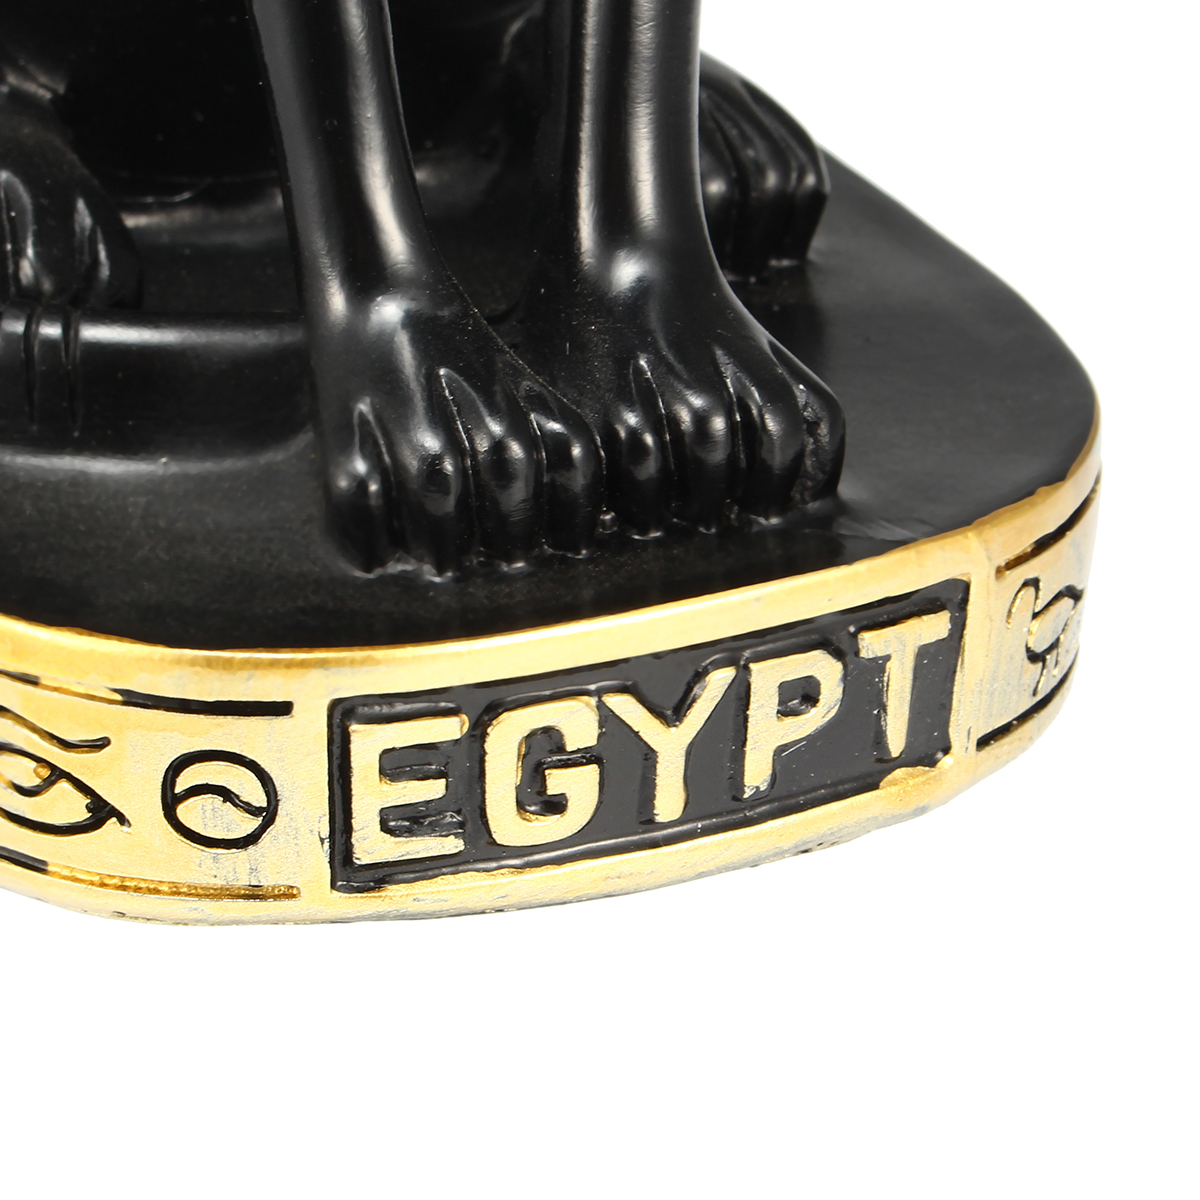 12-Cat-Figurine-Egyptian-Ancient-Bastet-Vintage-Goddess-Statue-Home-Decorations-1376088